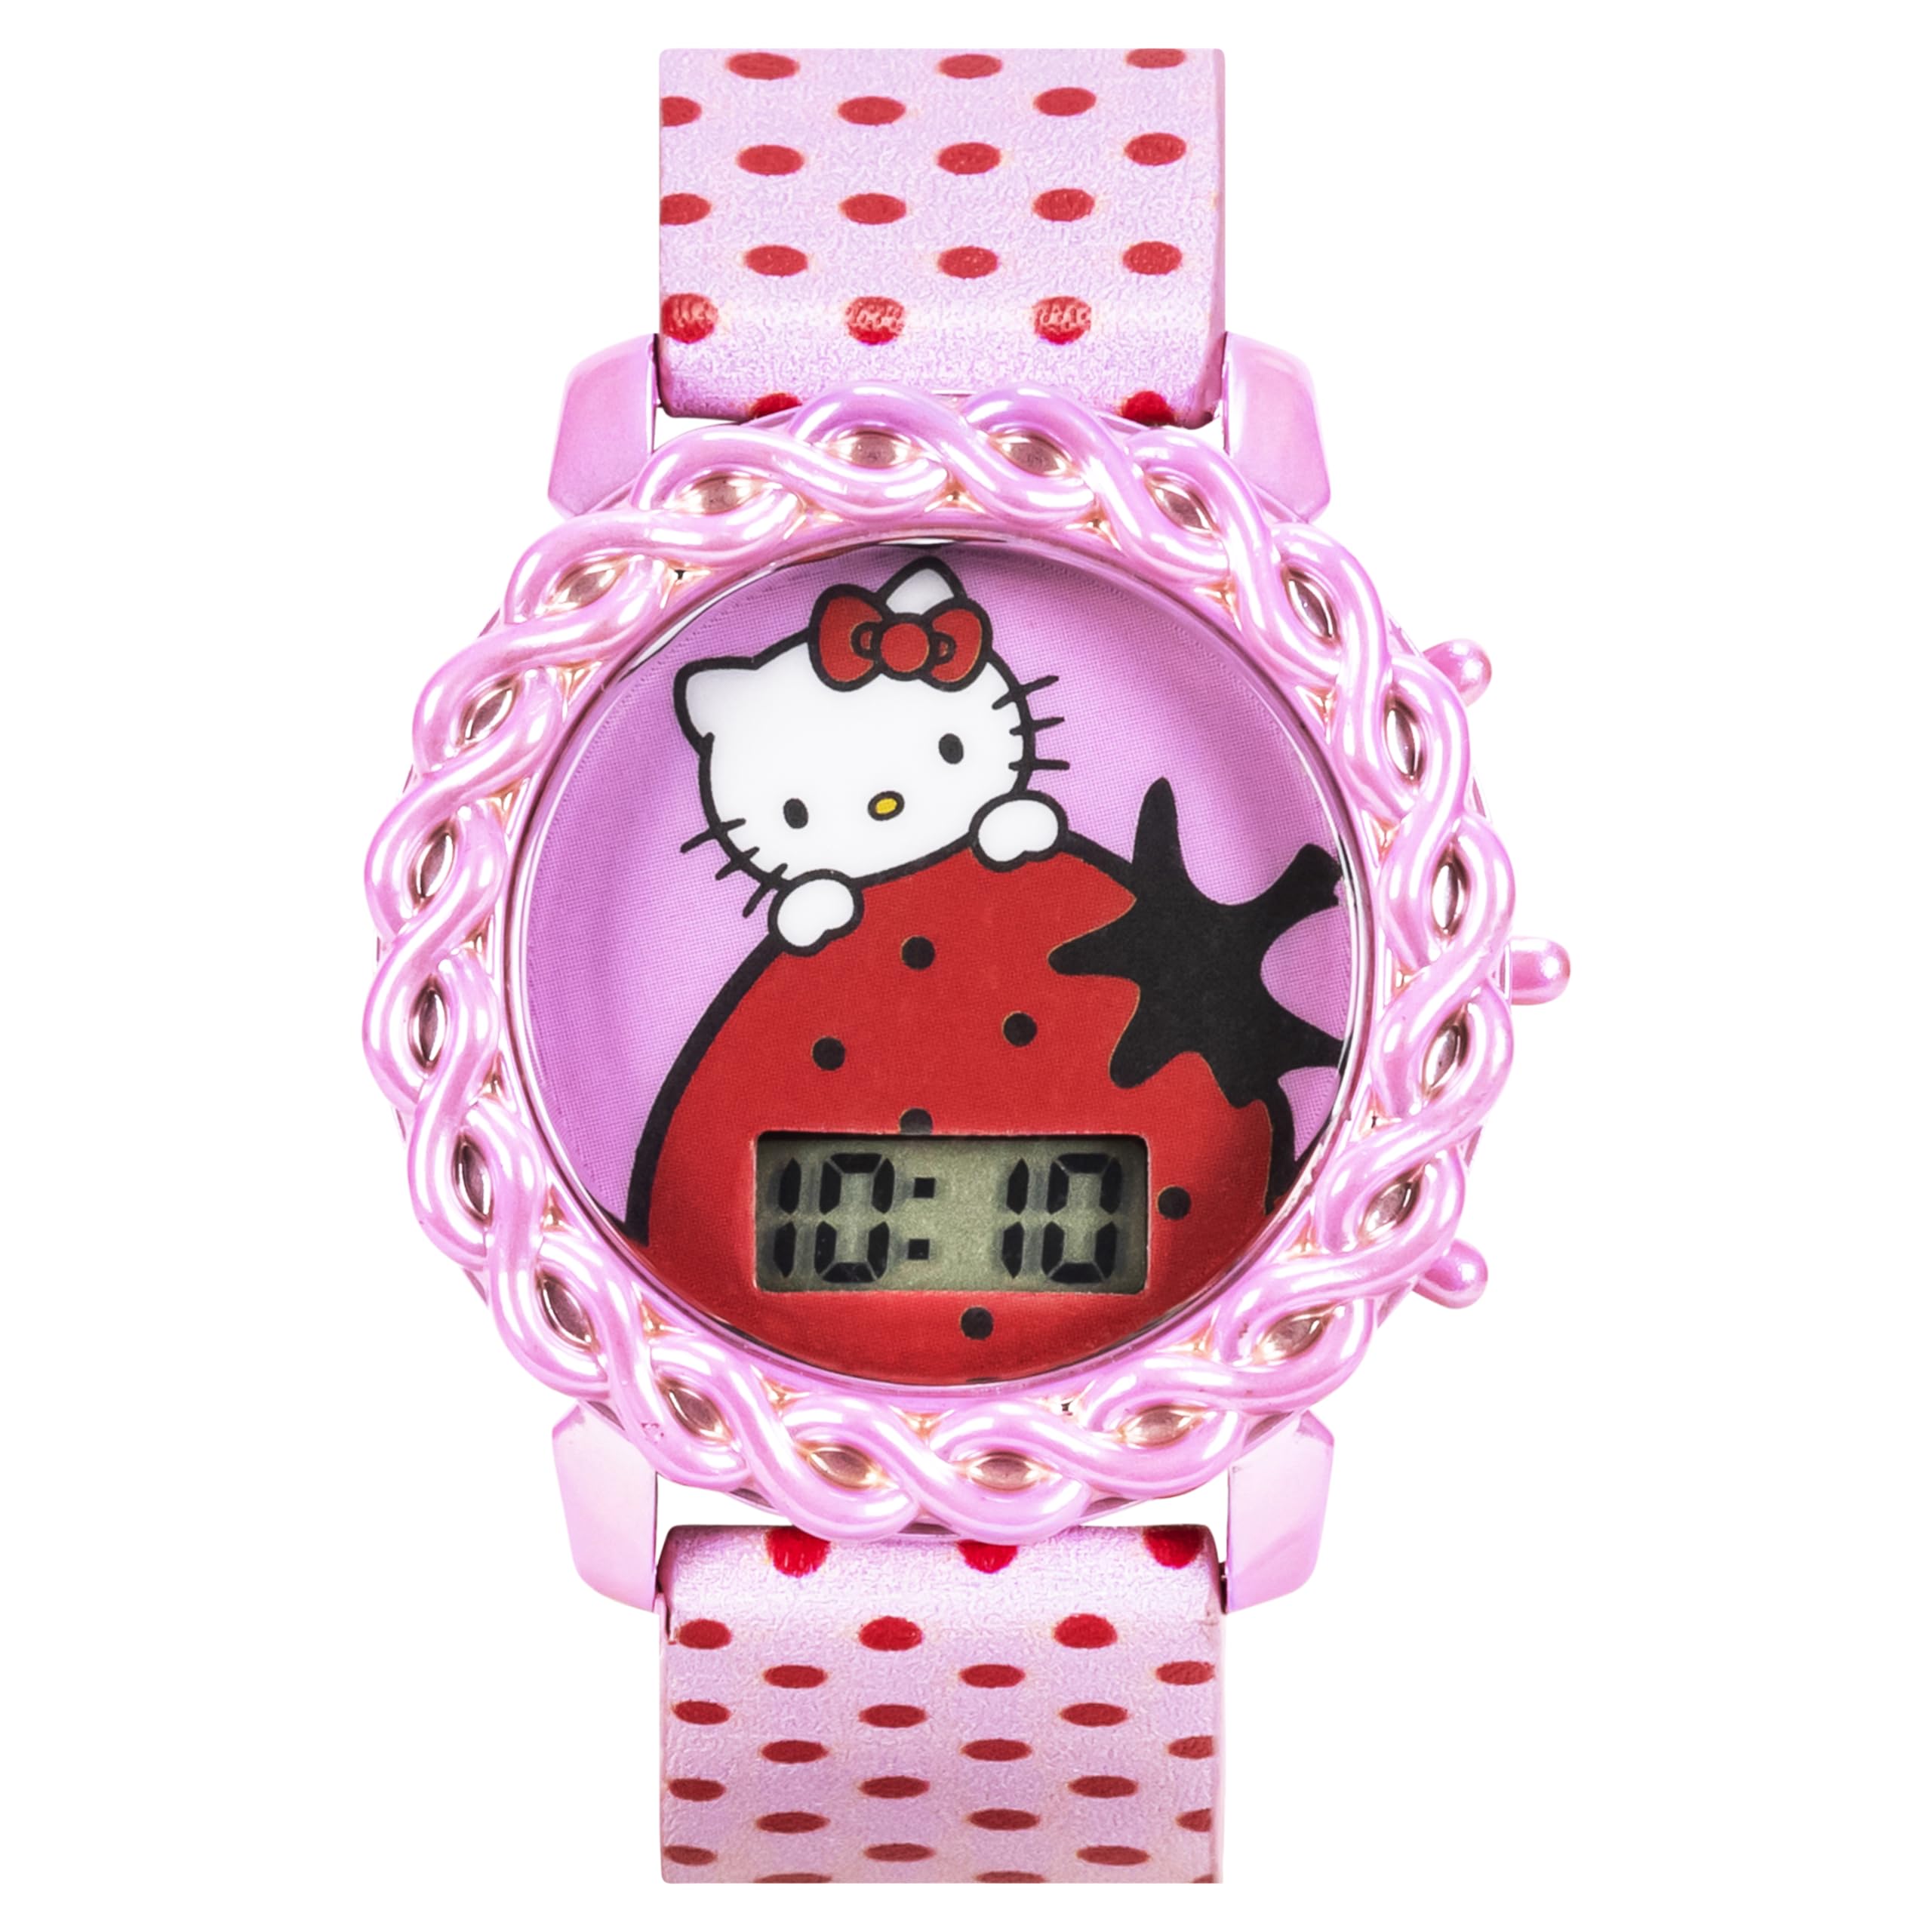 Accutime Hello Kitty Digital LCD Quartz Light Up Kids Pink Watch for Girls with Polka Dot Print Band Strap (Model: HK4190AZ)